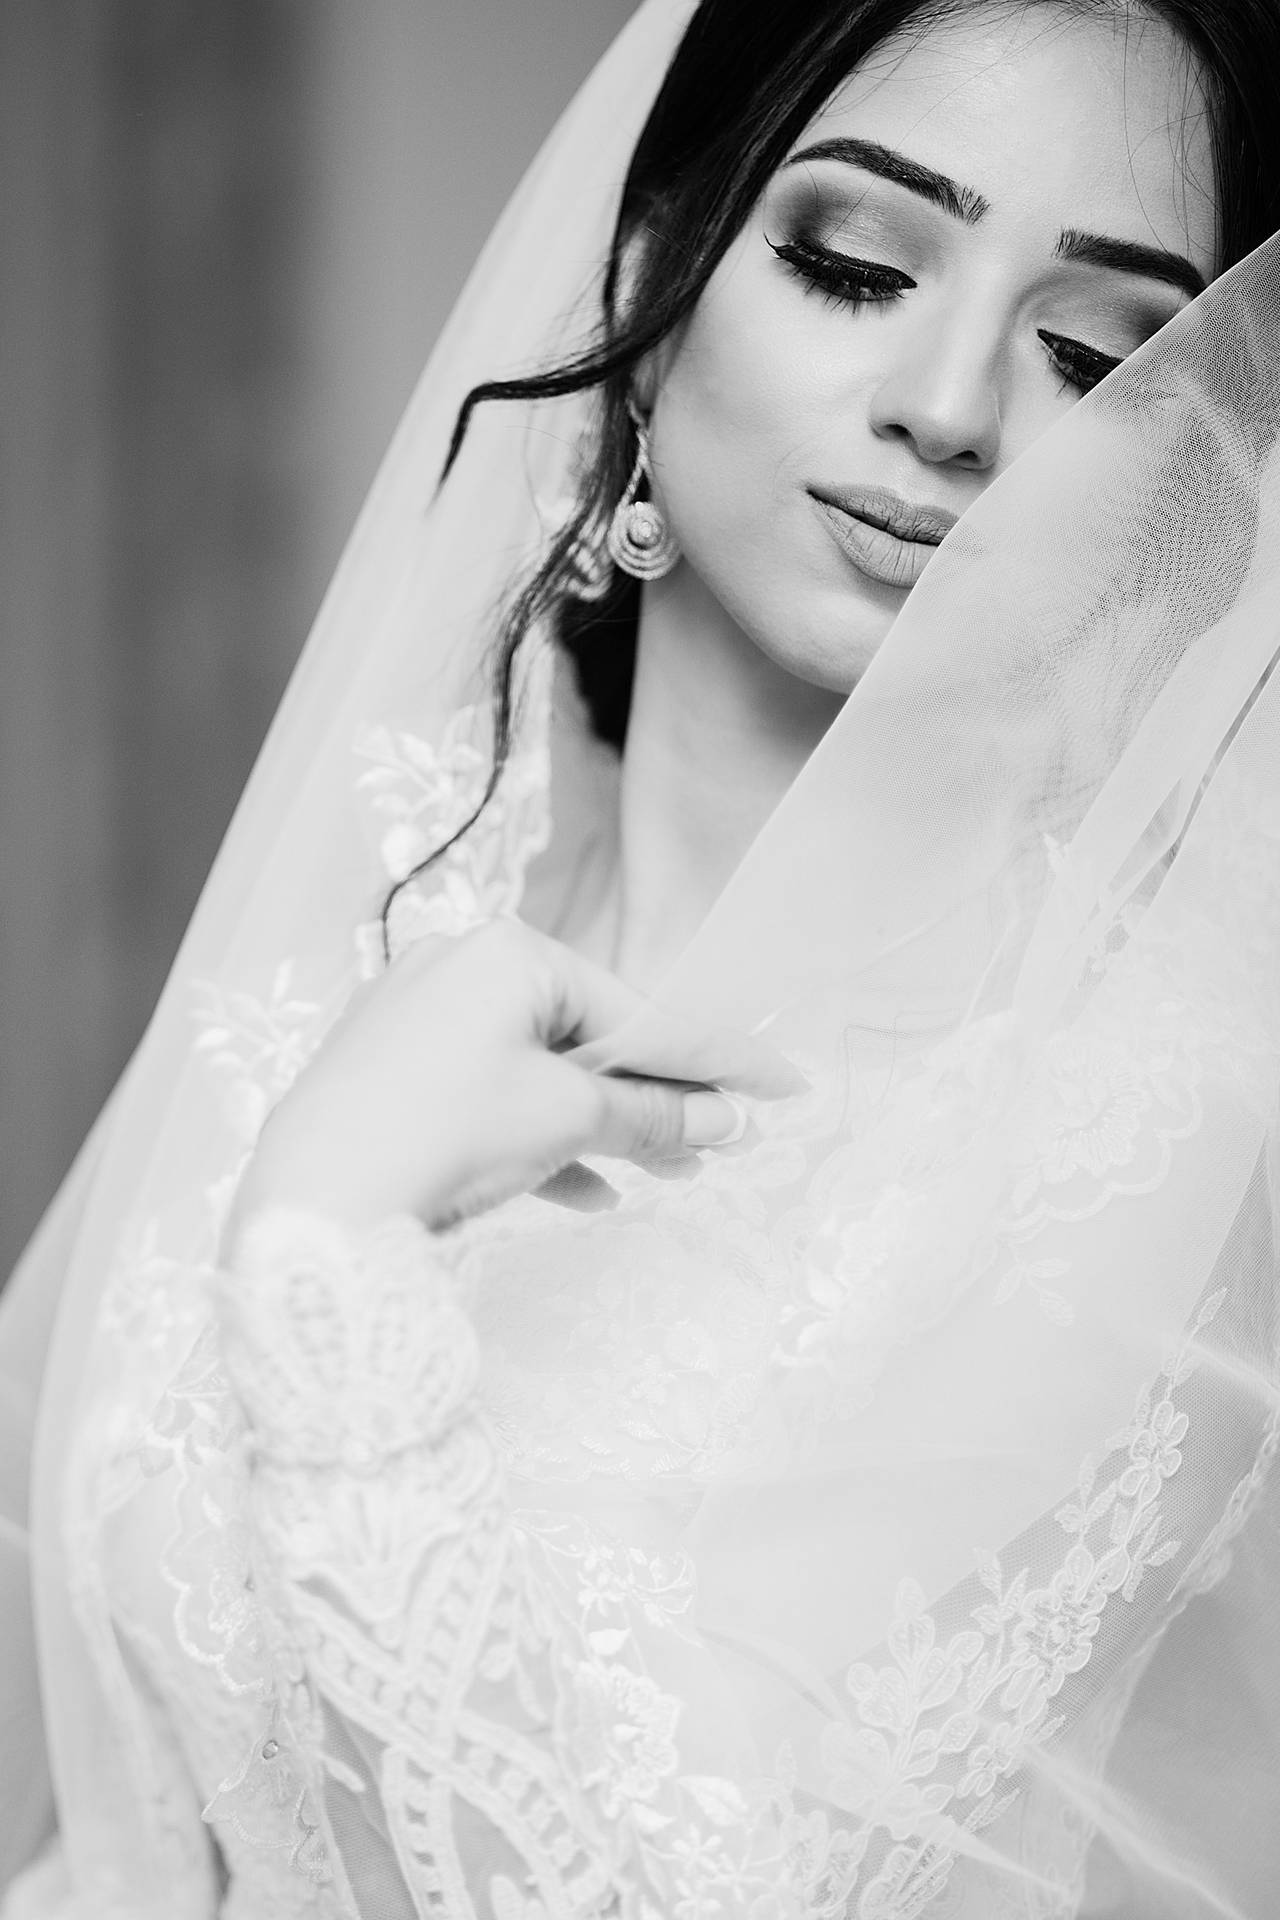 Black And White Bridal Photoshoot Wallpaper